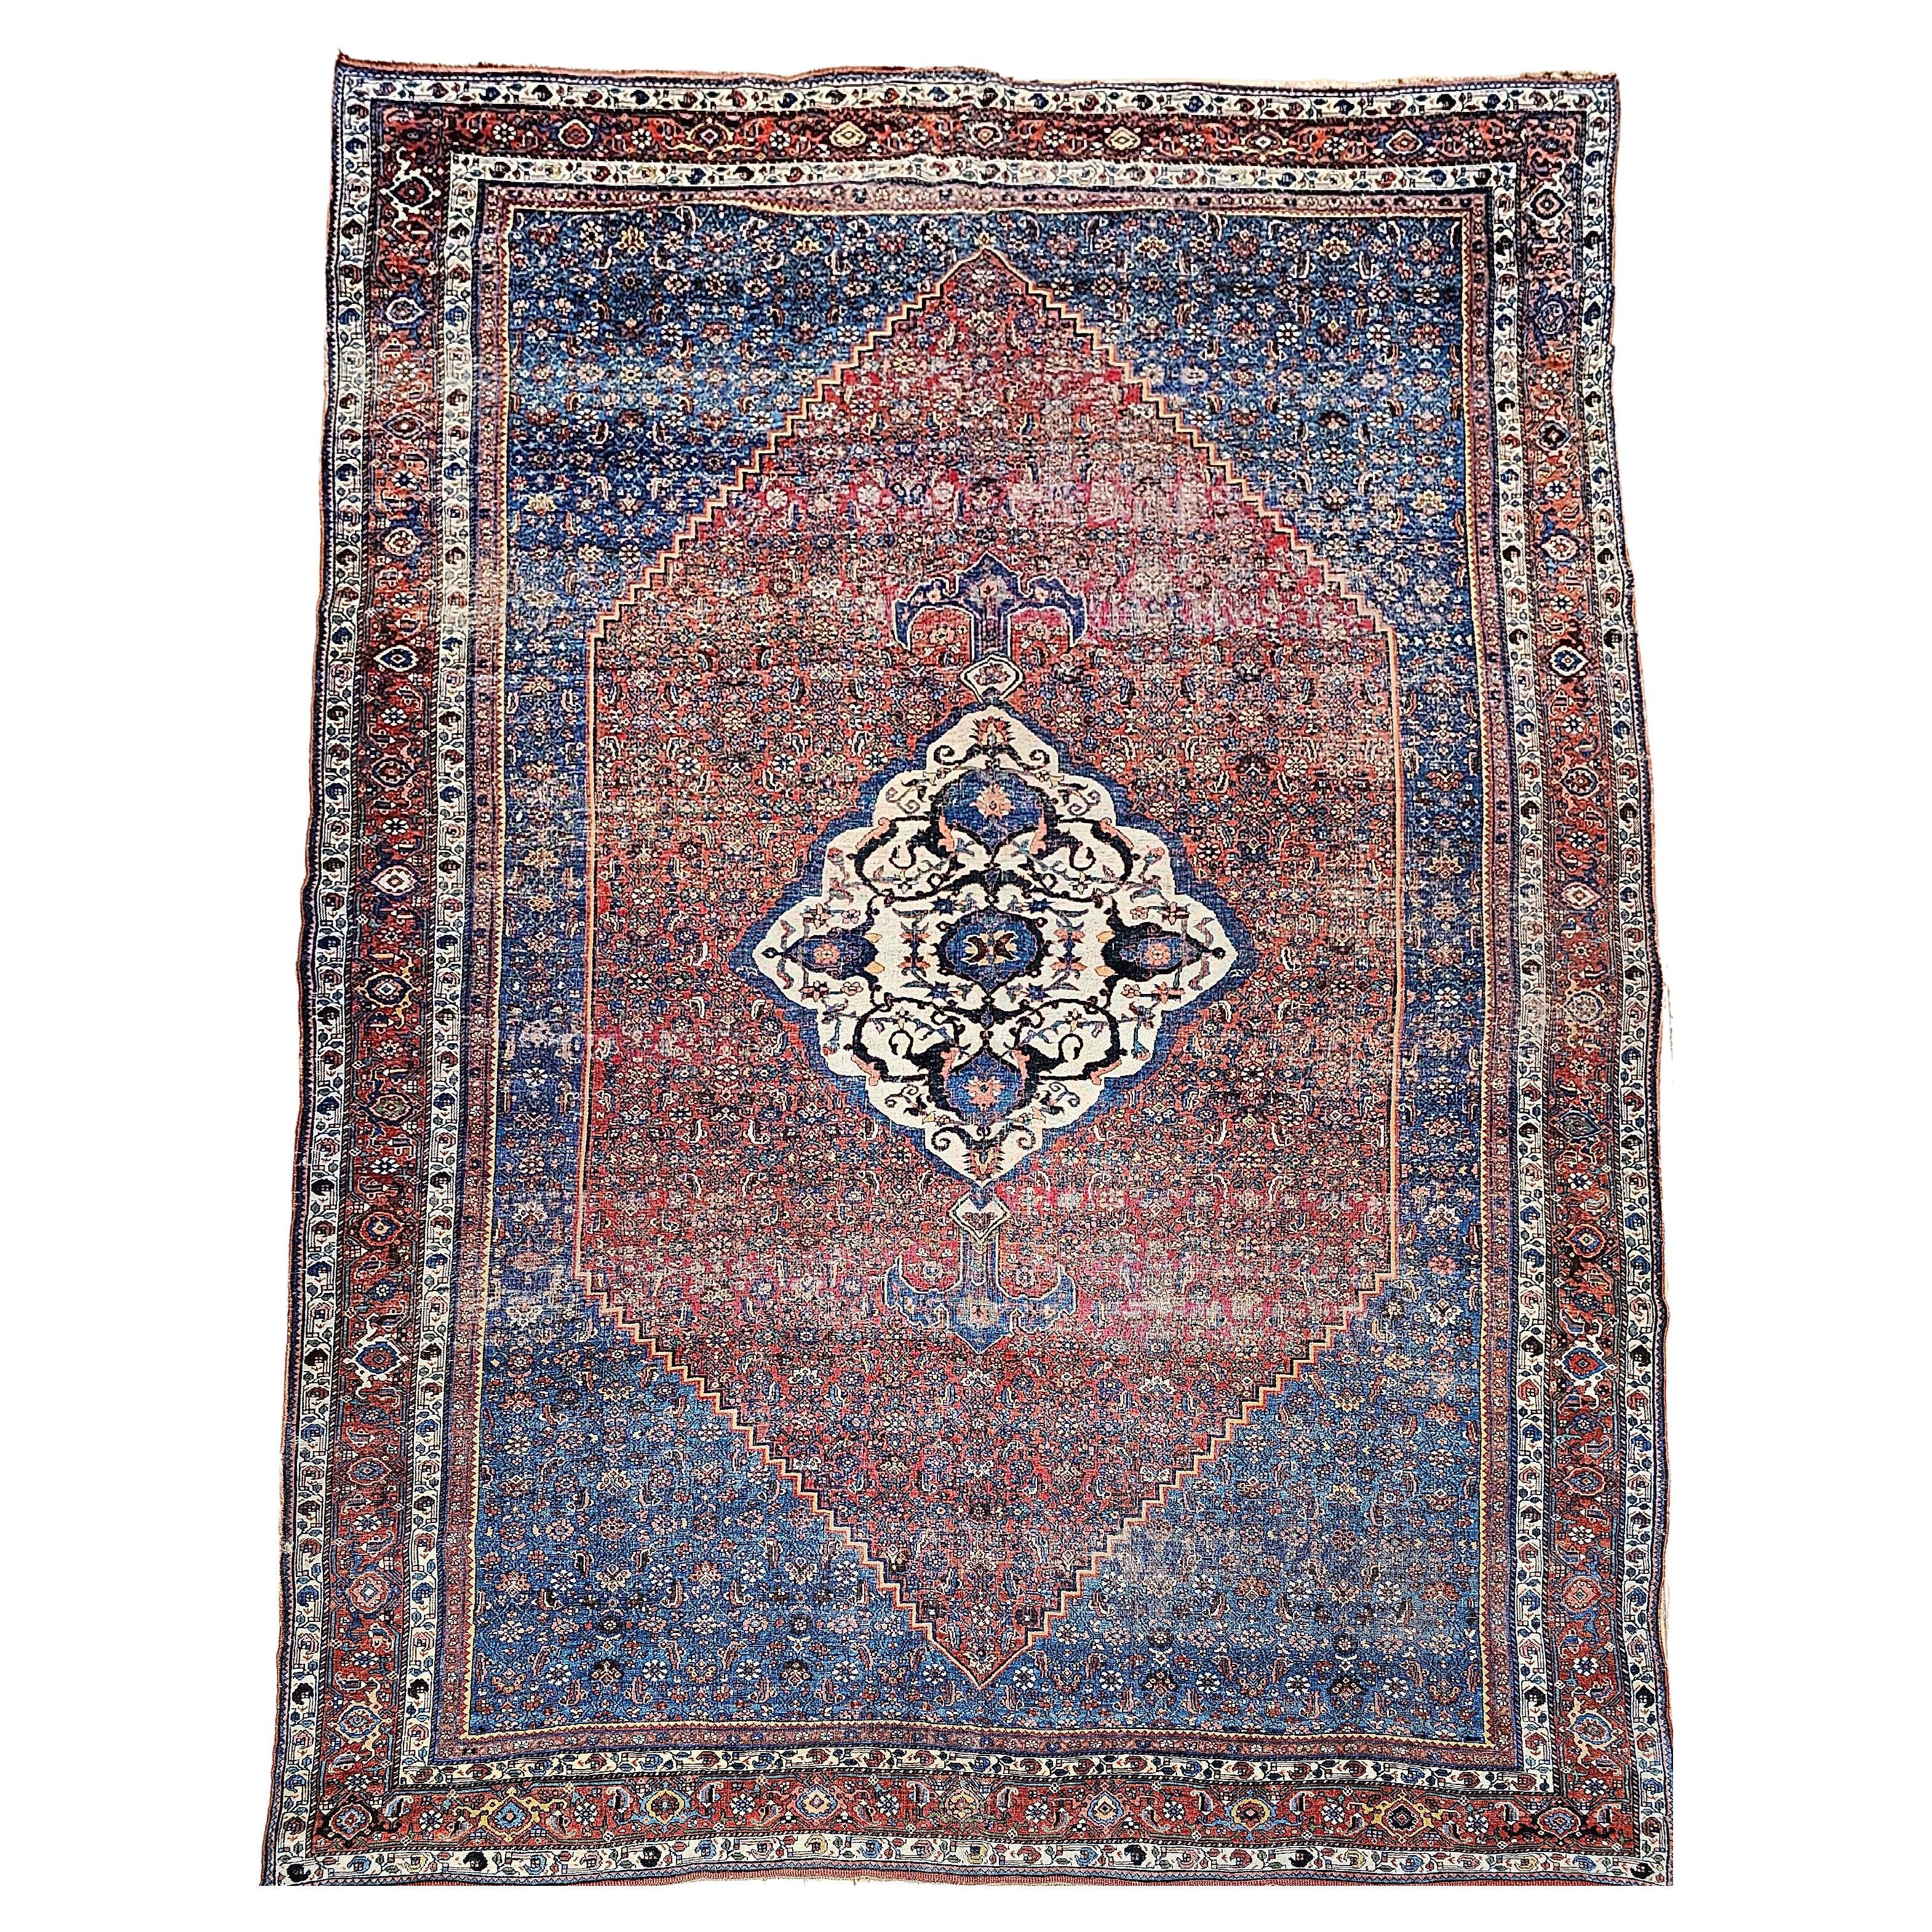 Vintage Persian Bidjar in a Herati Geometric Pattern in French Blue, Red, Ivory